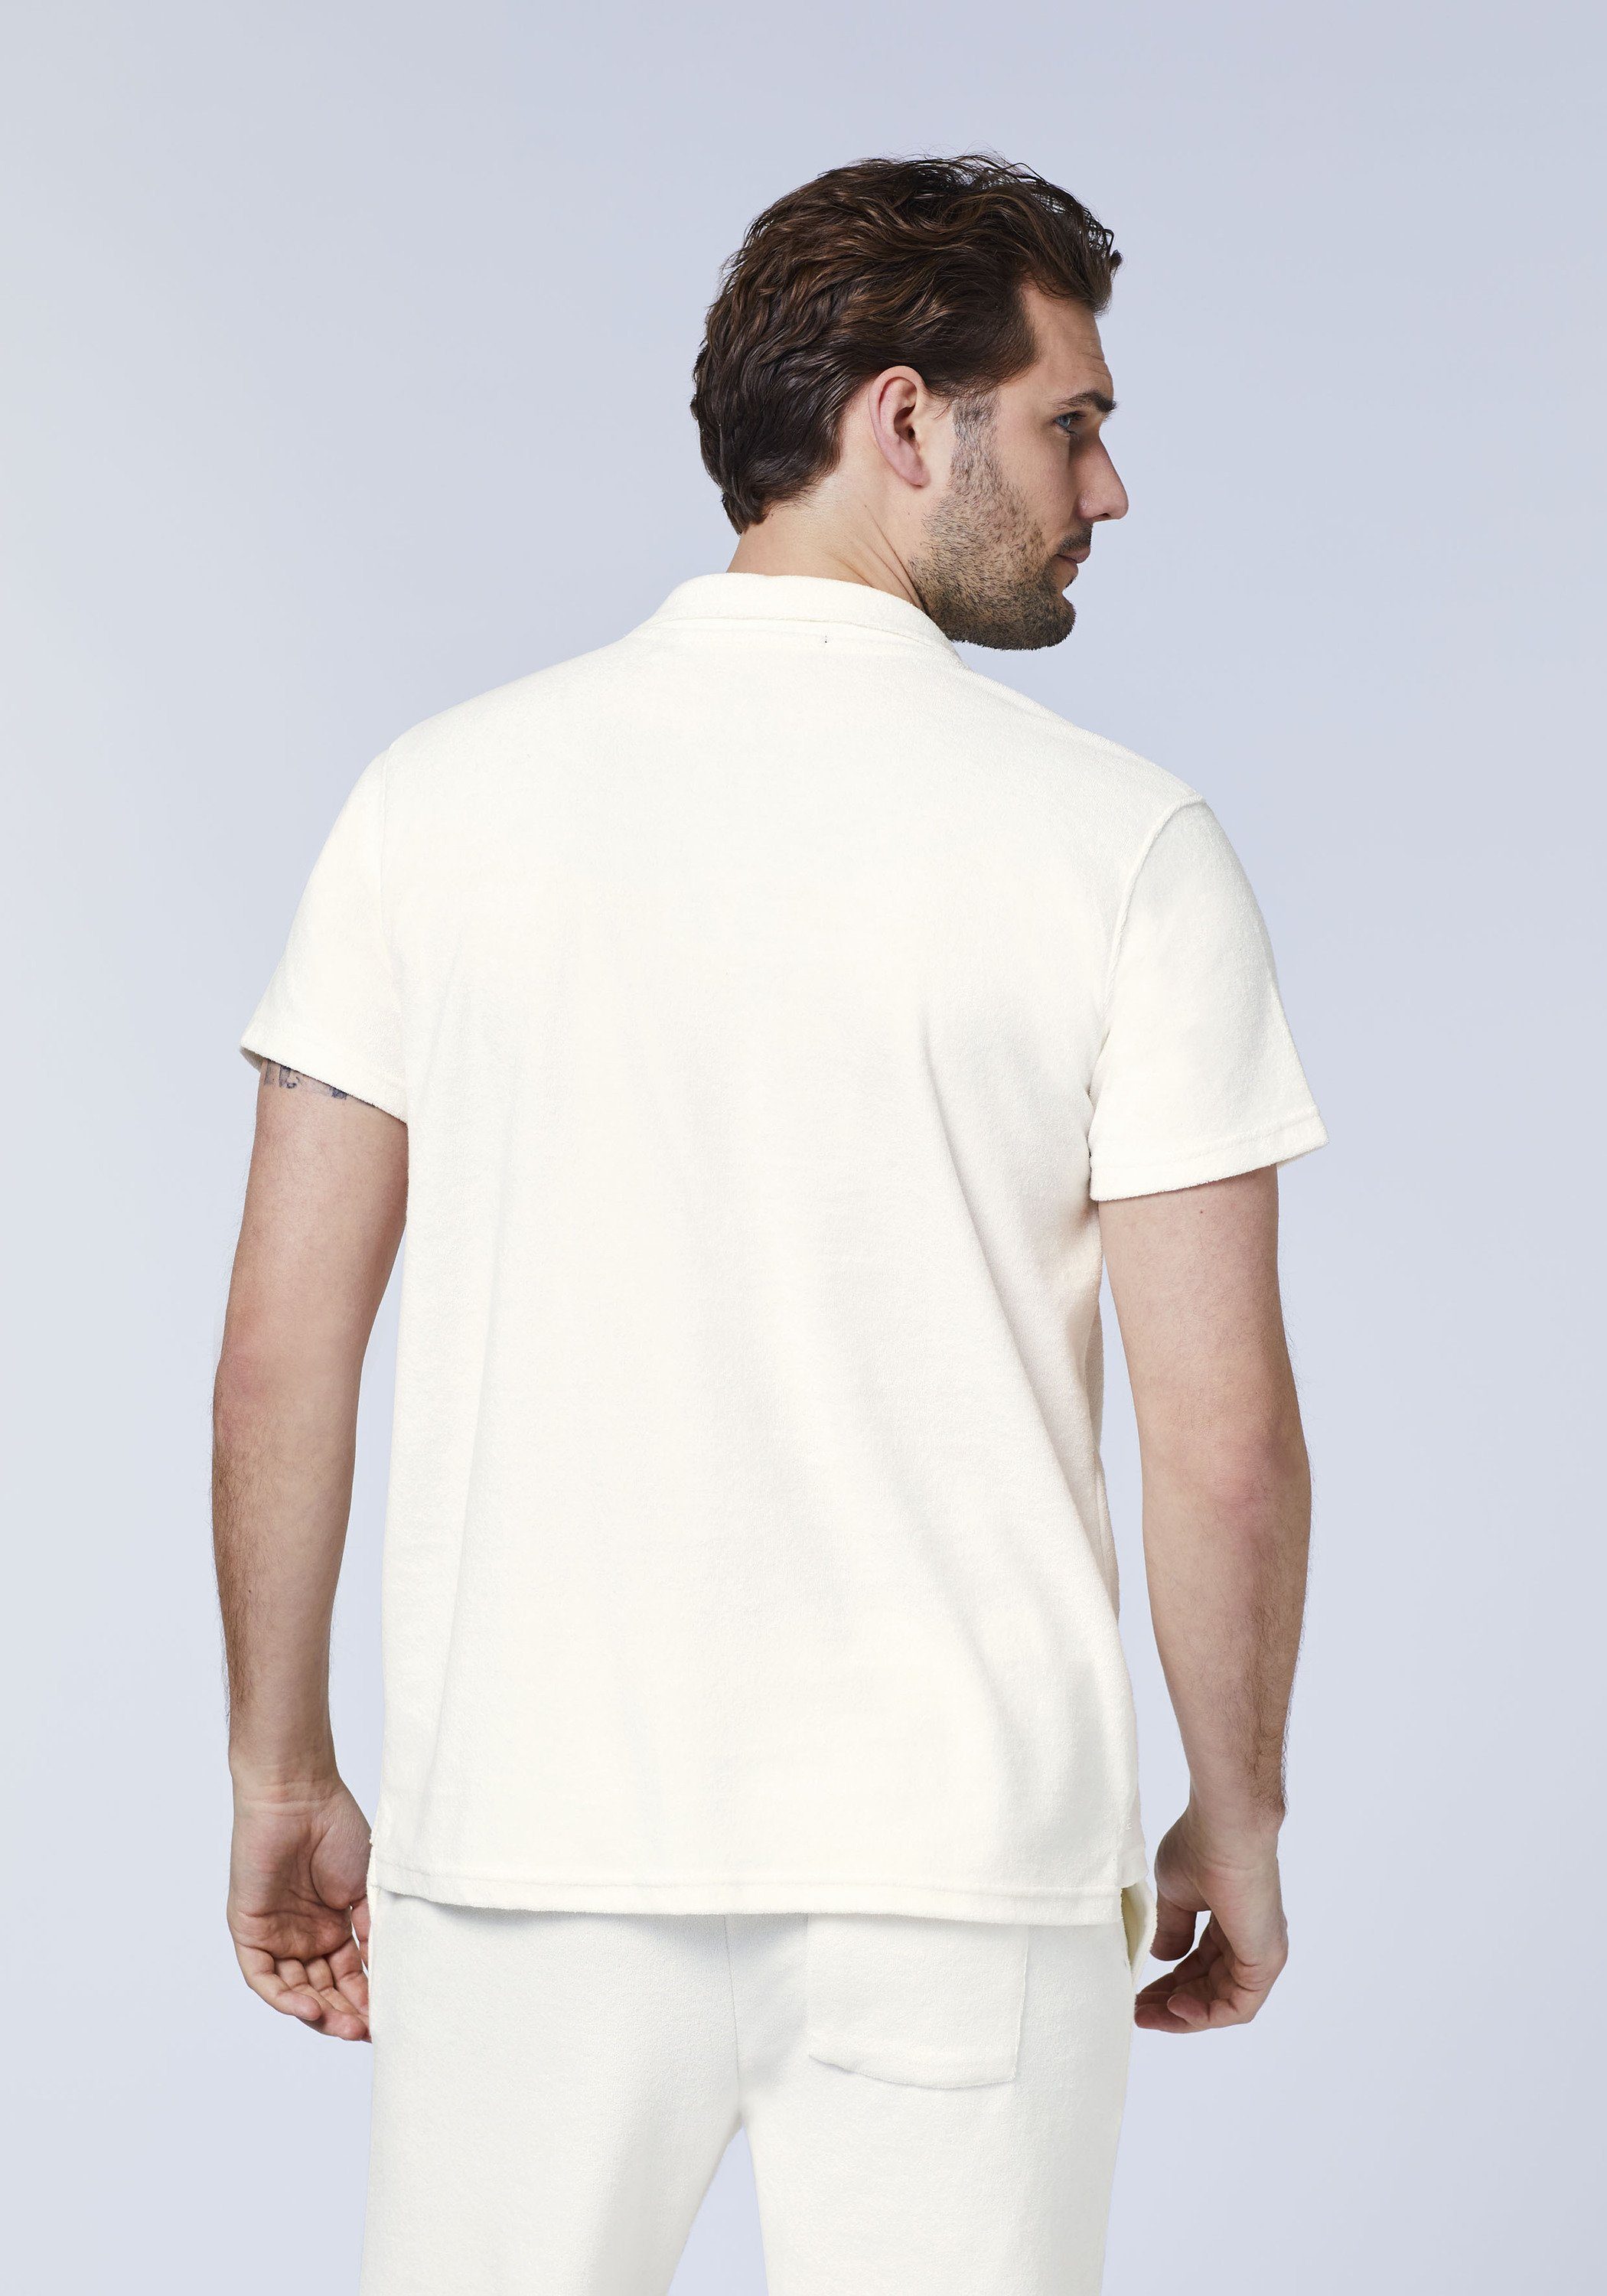 Poloshirt 1 Star Poloshirt im 11-4202 Frottee-Look Chiemsee modernen White